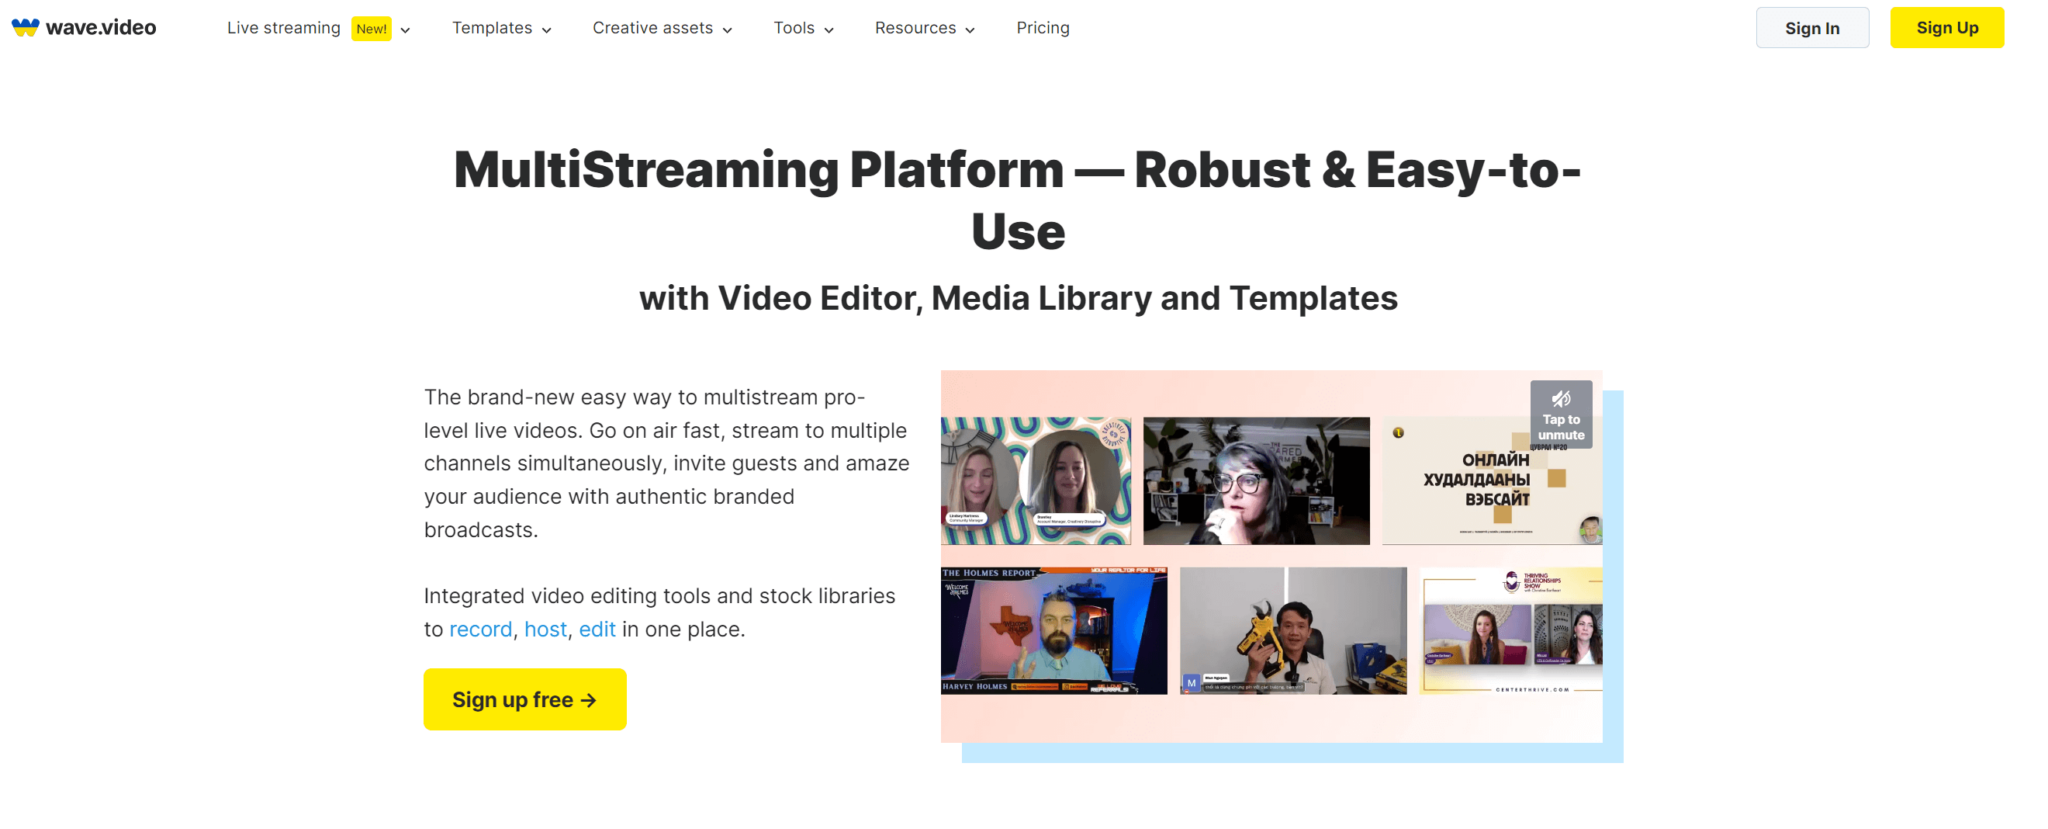 Wave.video - Best multistreaming platform